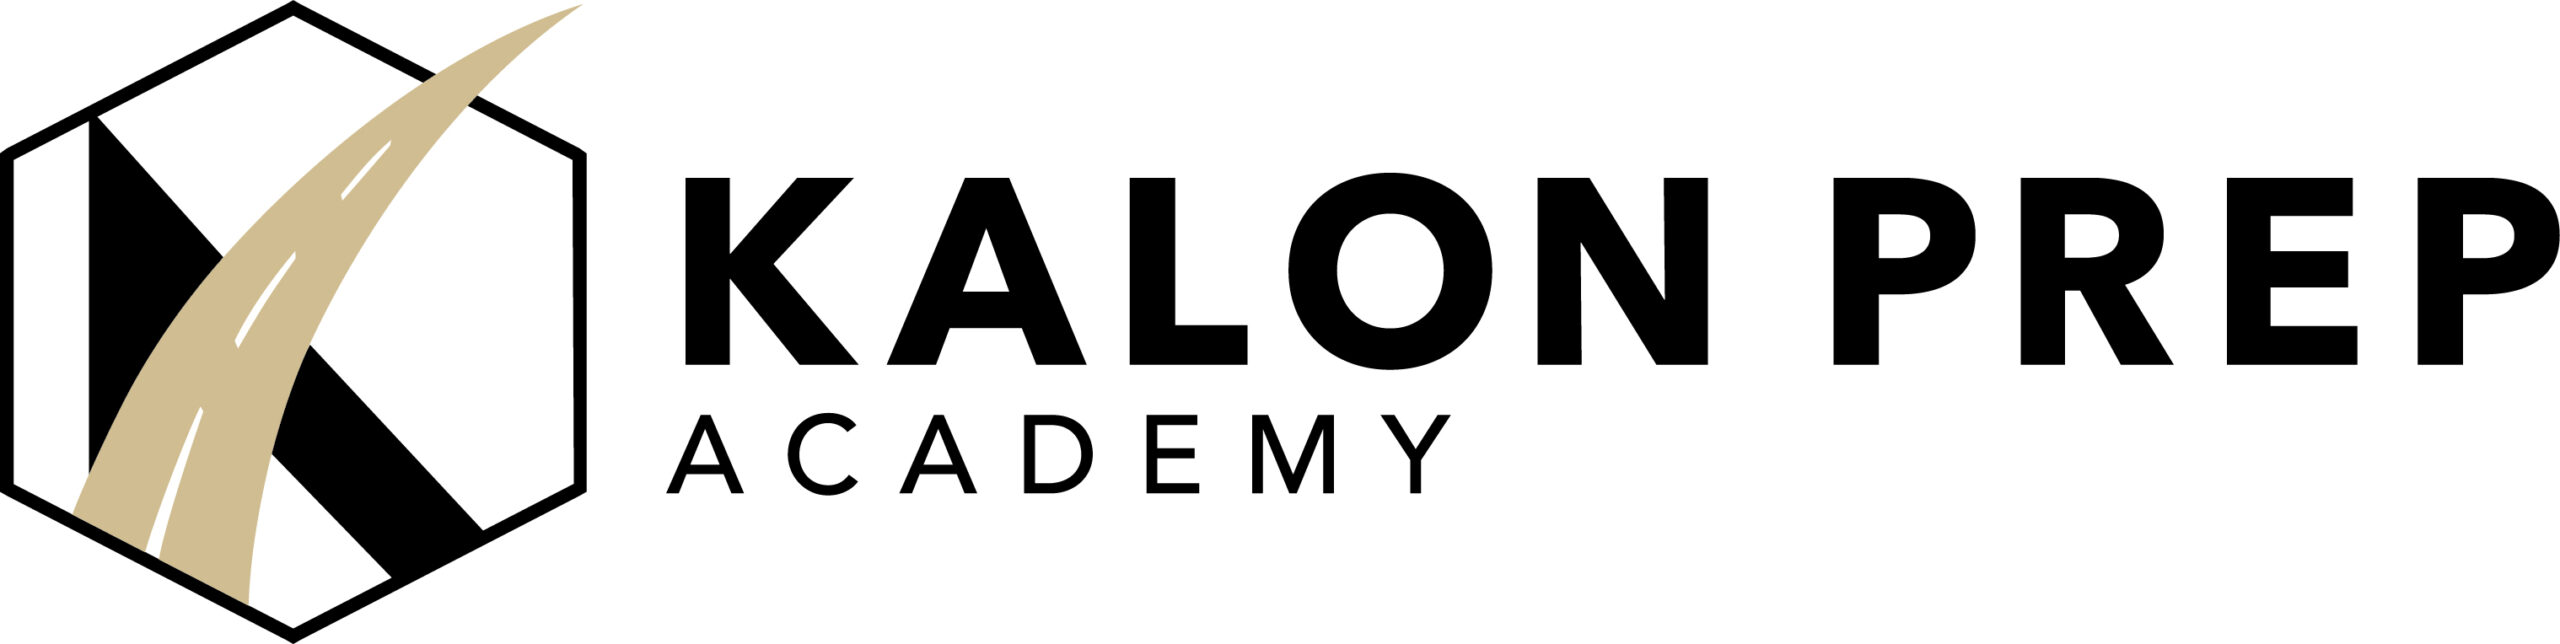 Kalon Prep Academy  New High School in Alexandria, MN